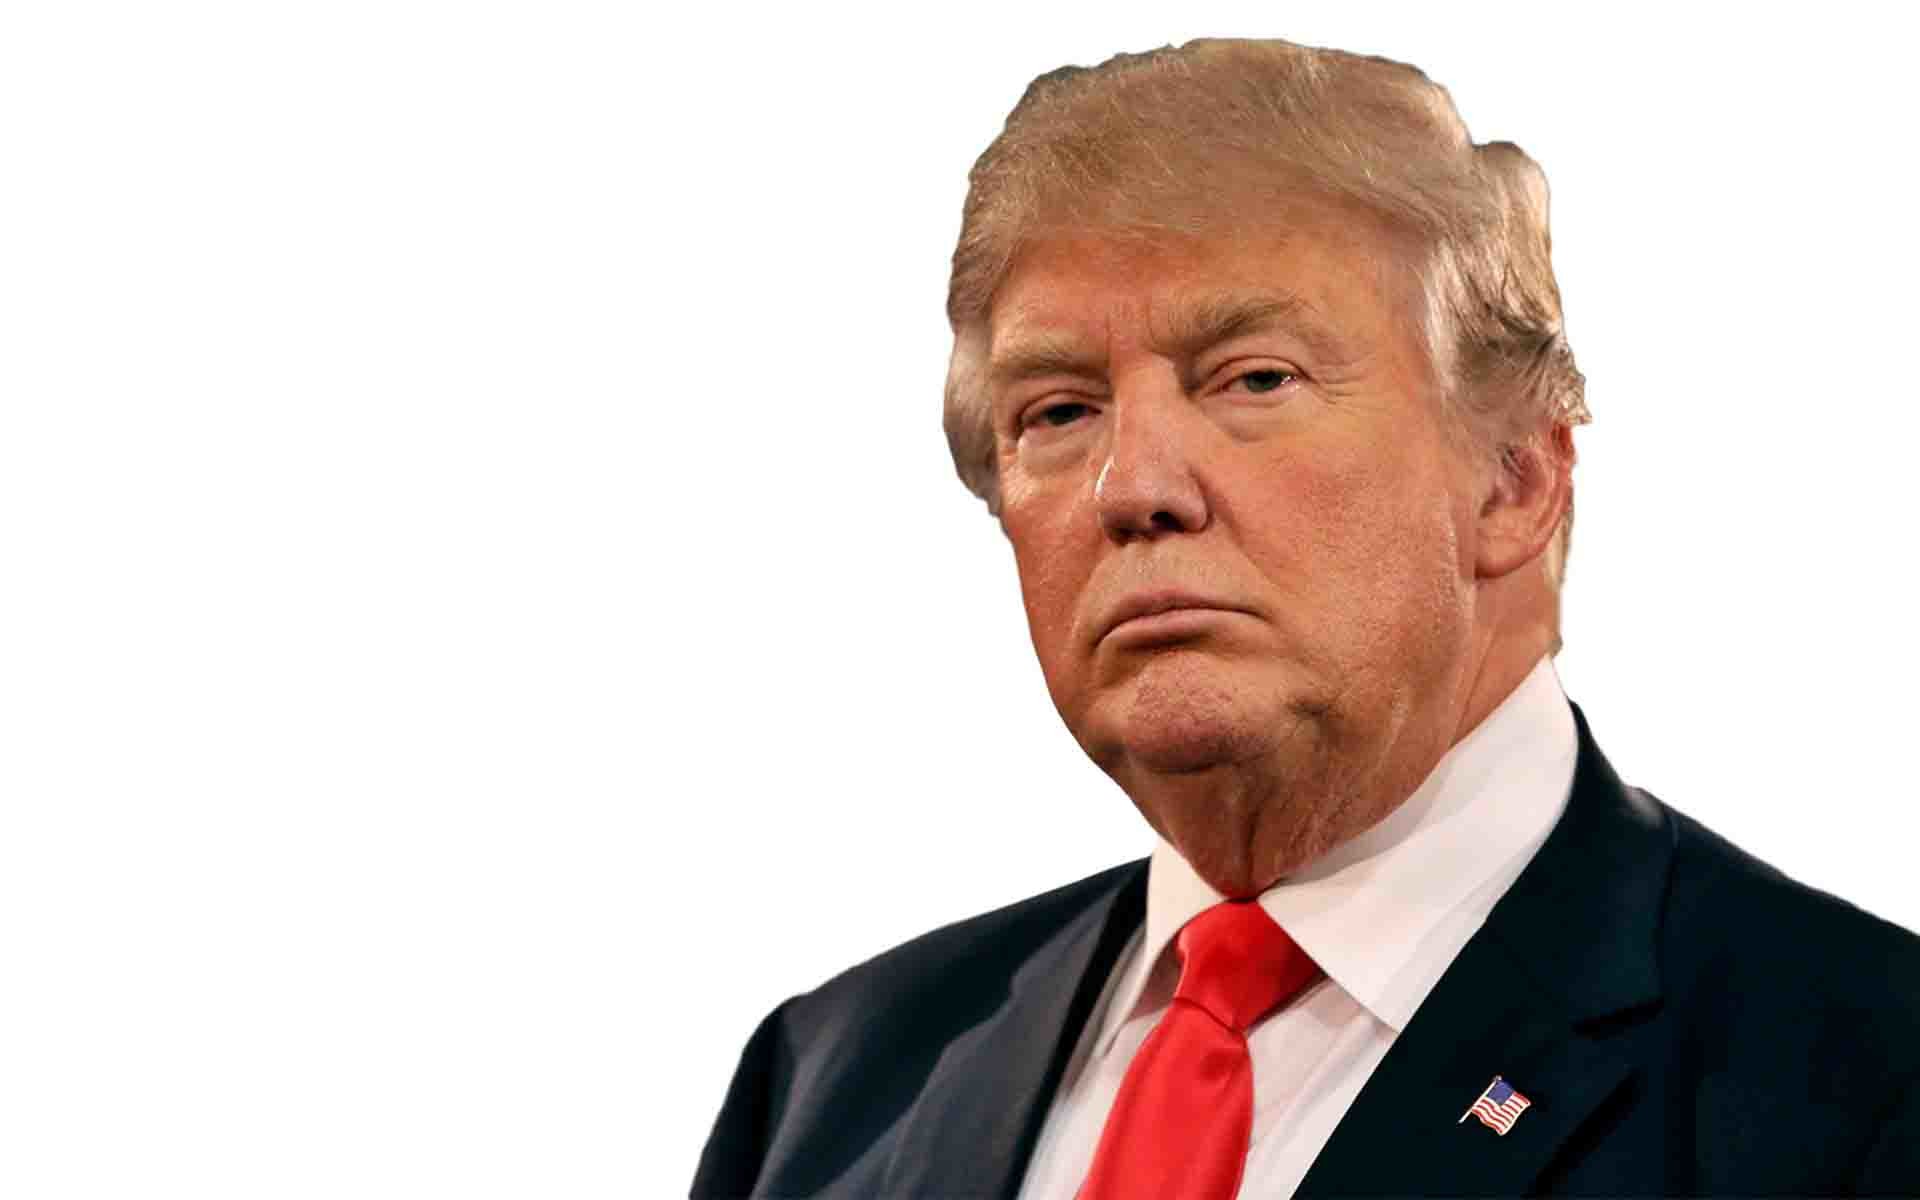 Donald Trump HD Wallpapers Free Download For Desktop